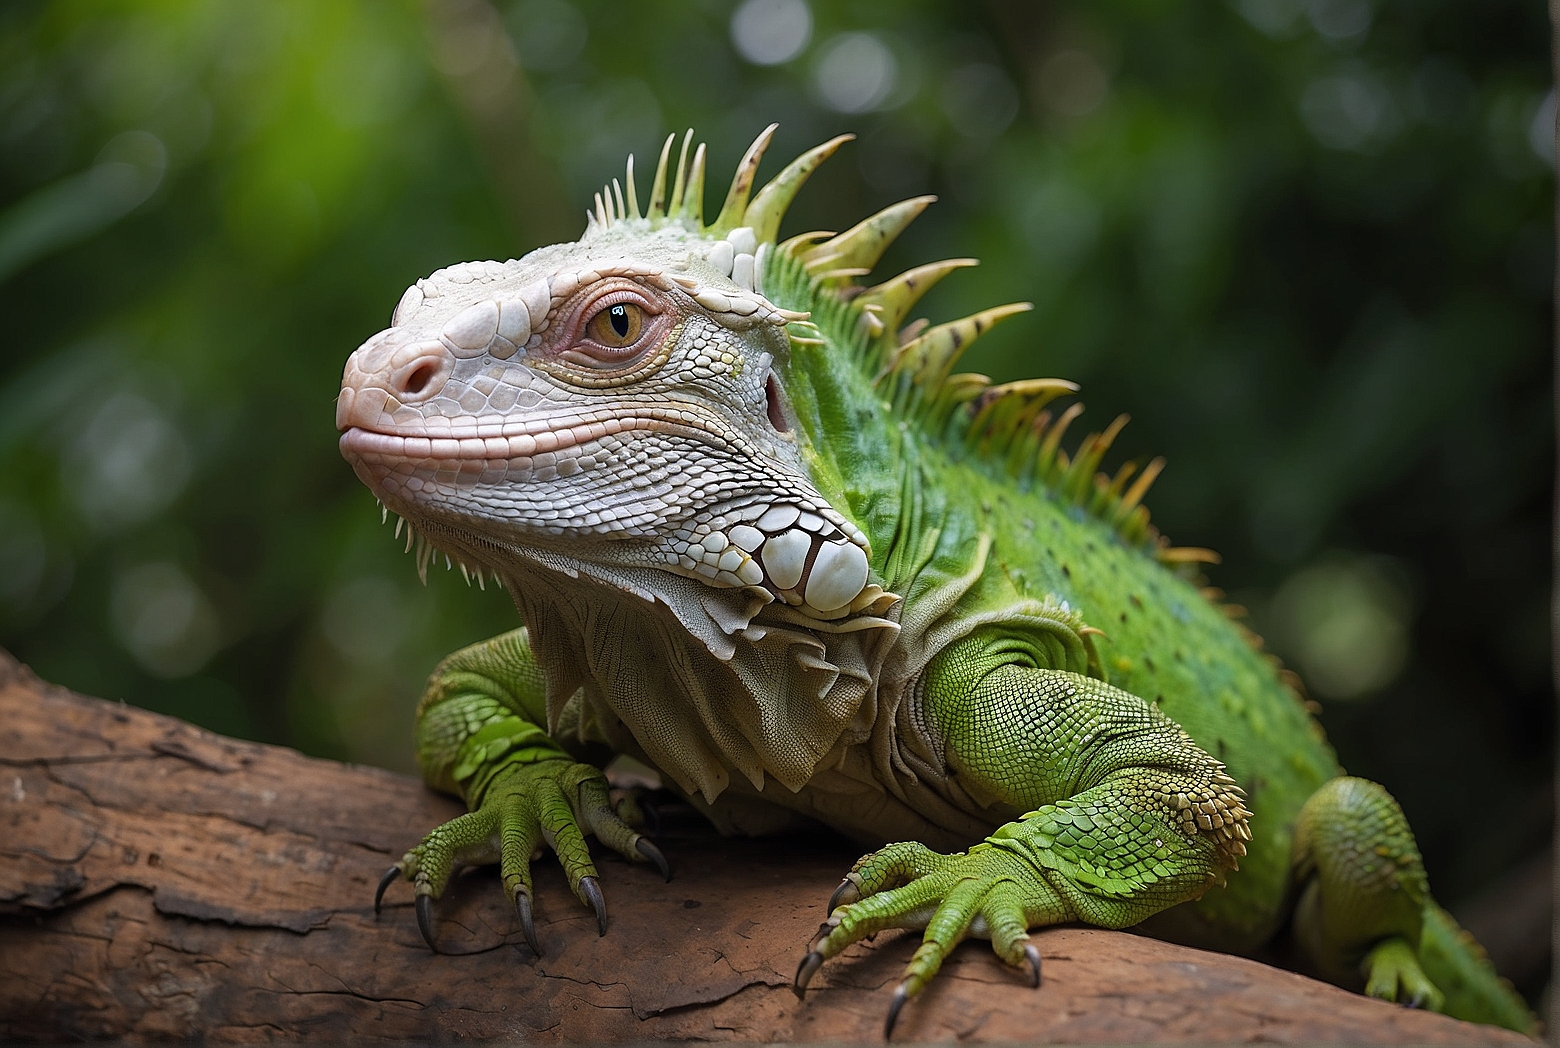 The Lifespan of a Green Iguana